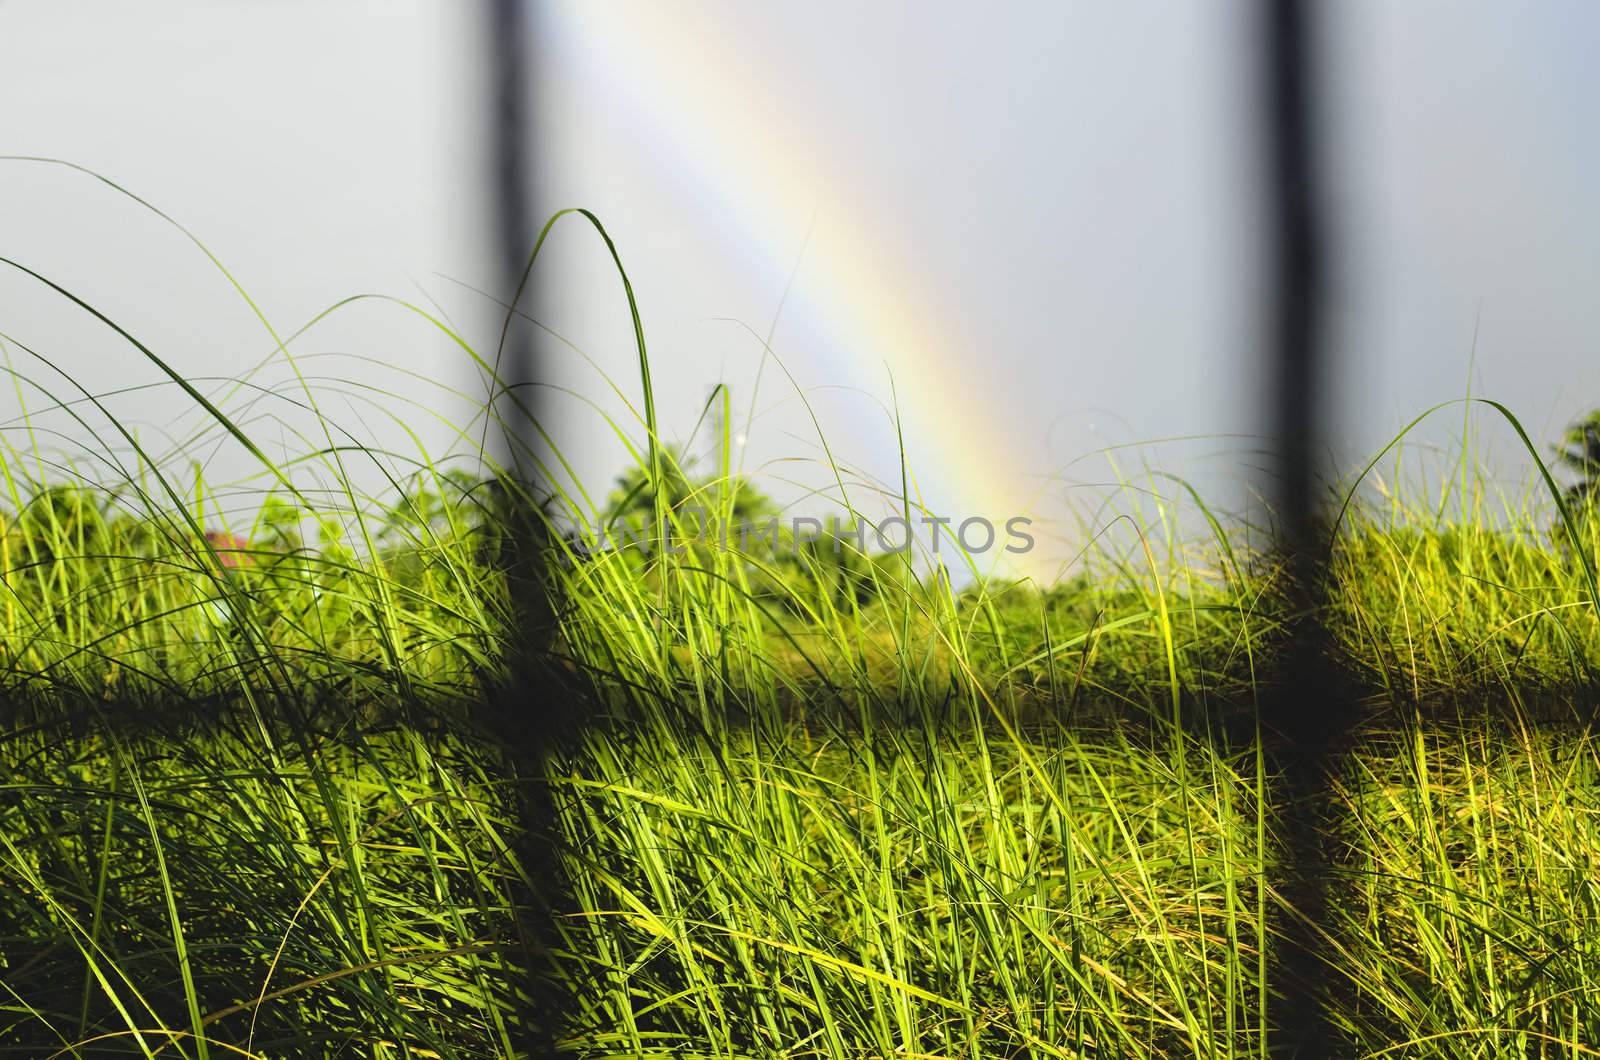 Part of rainbow over grass after a rainfall